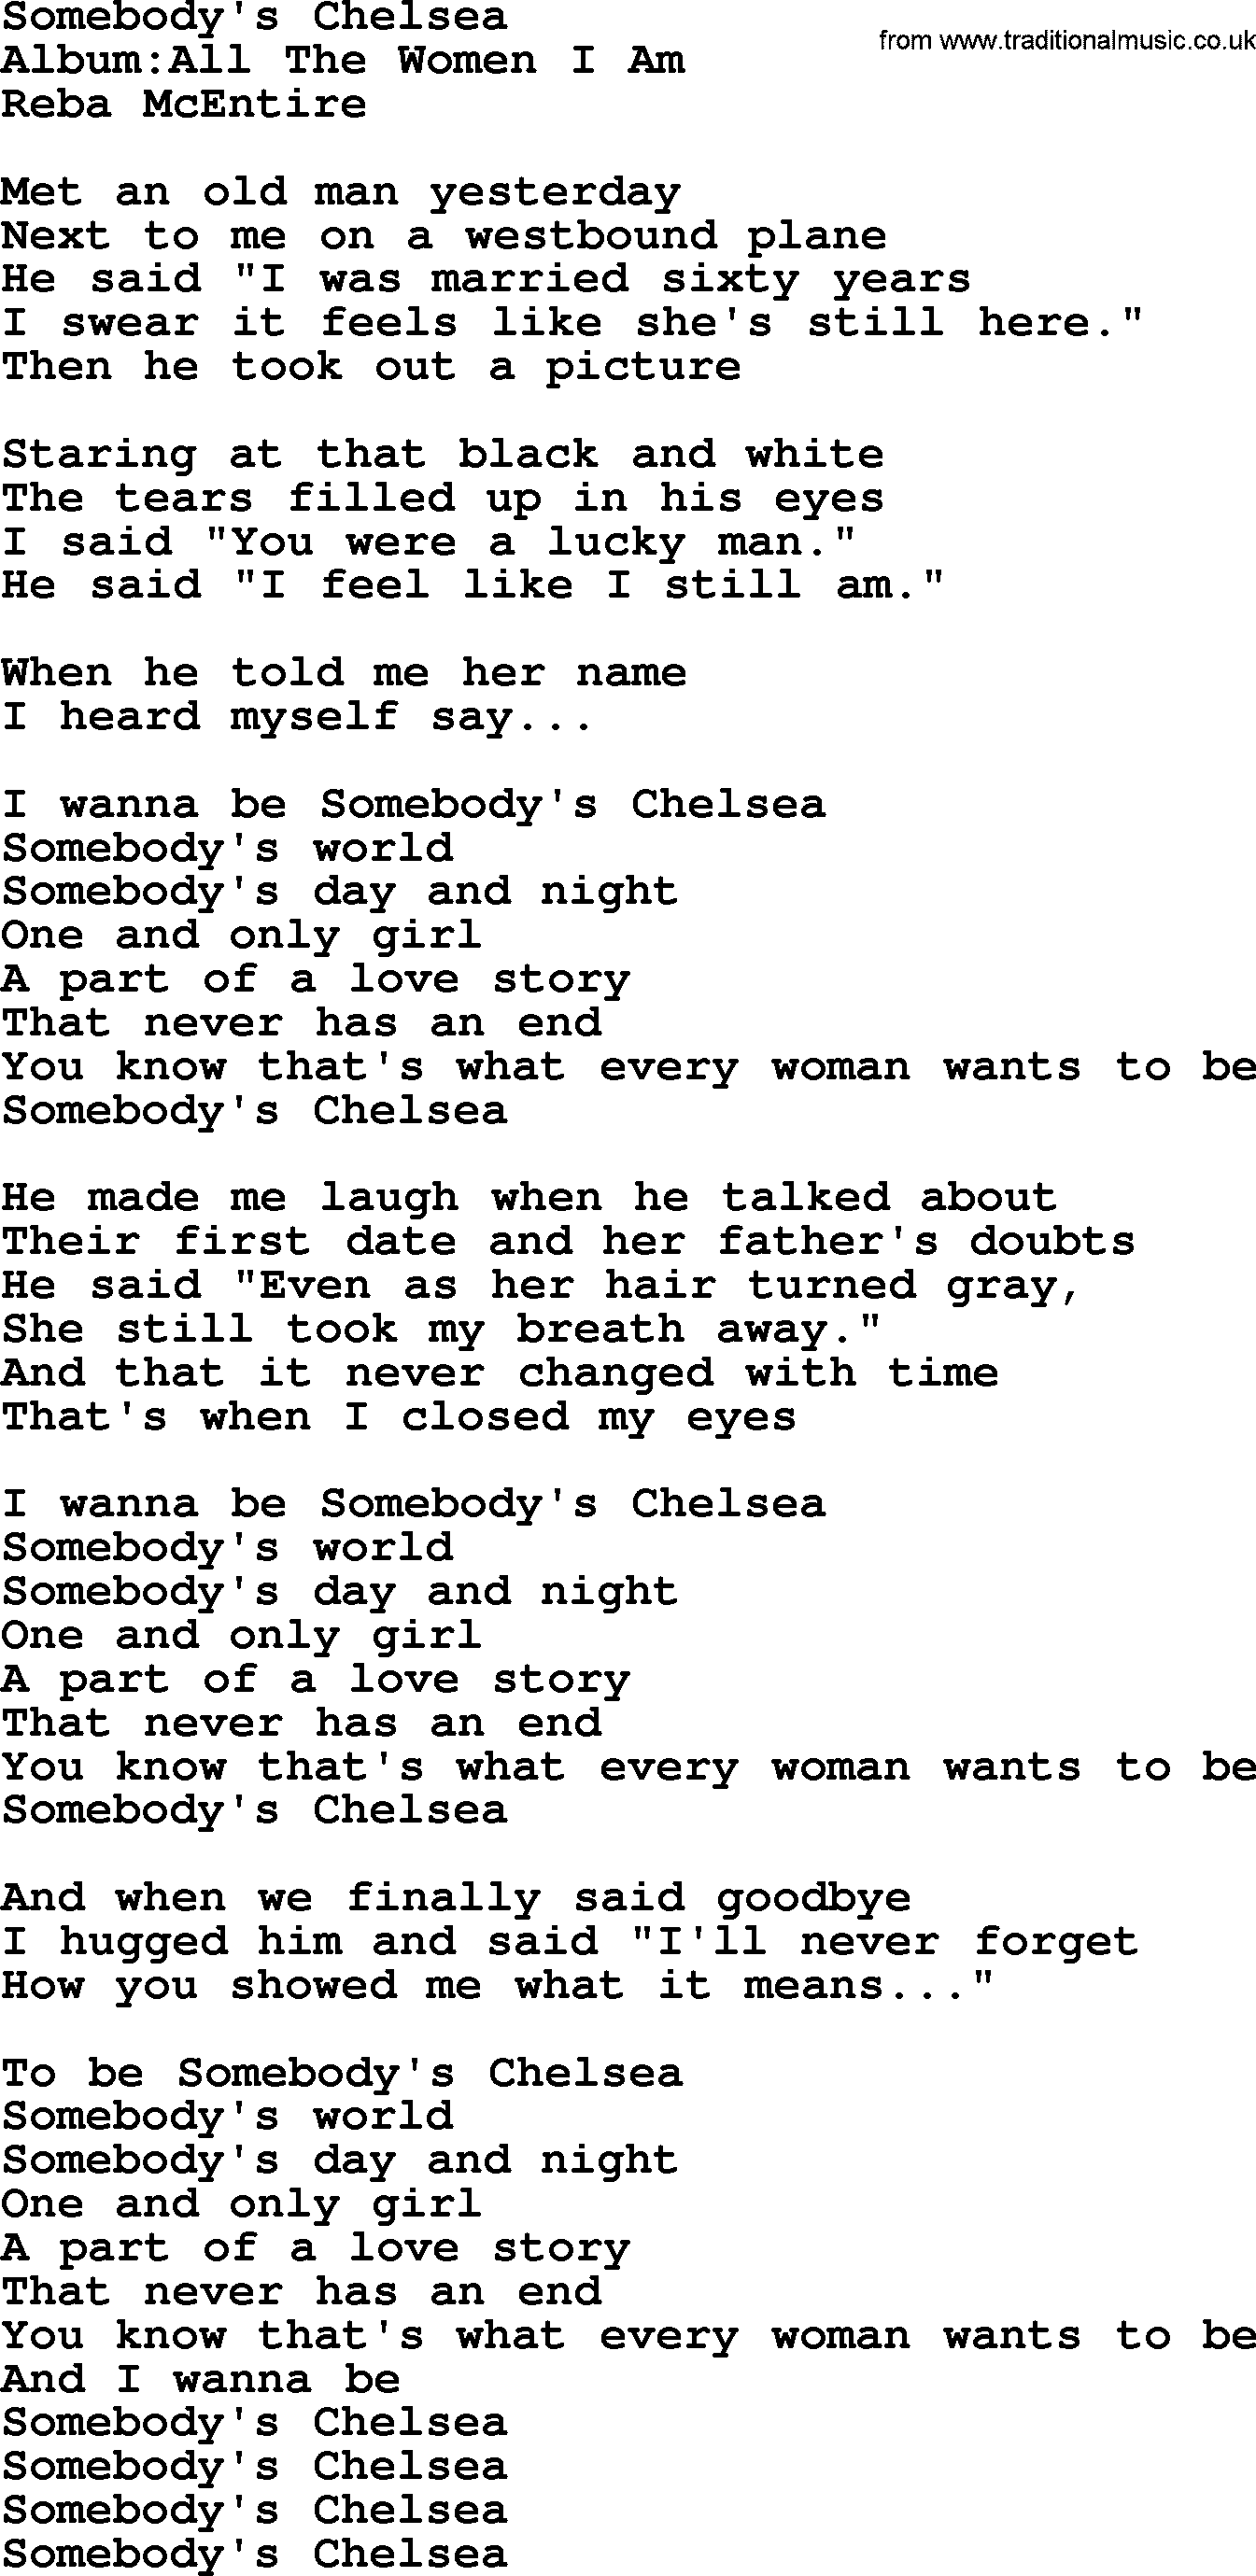 Reba McEntire song: Somebody's Chelsea lyrics